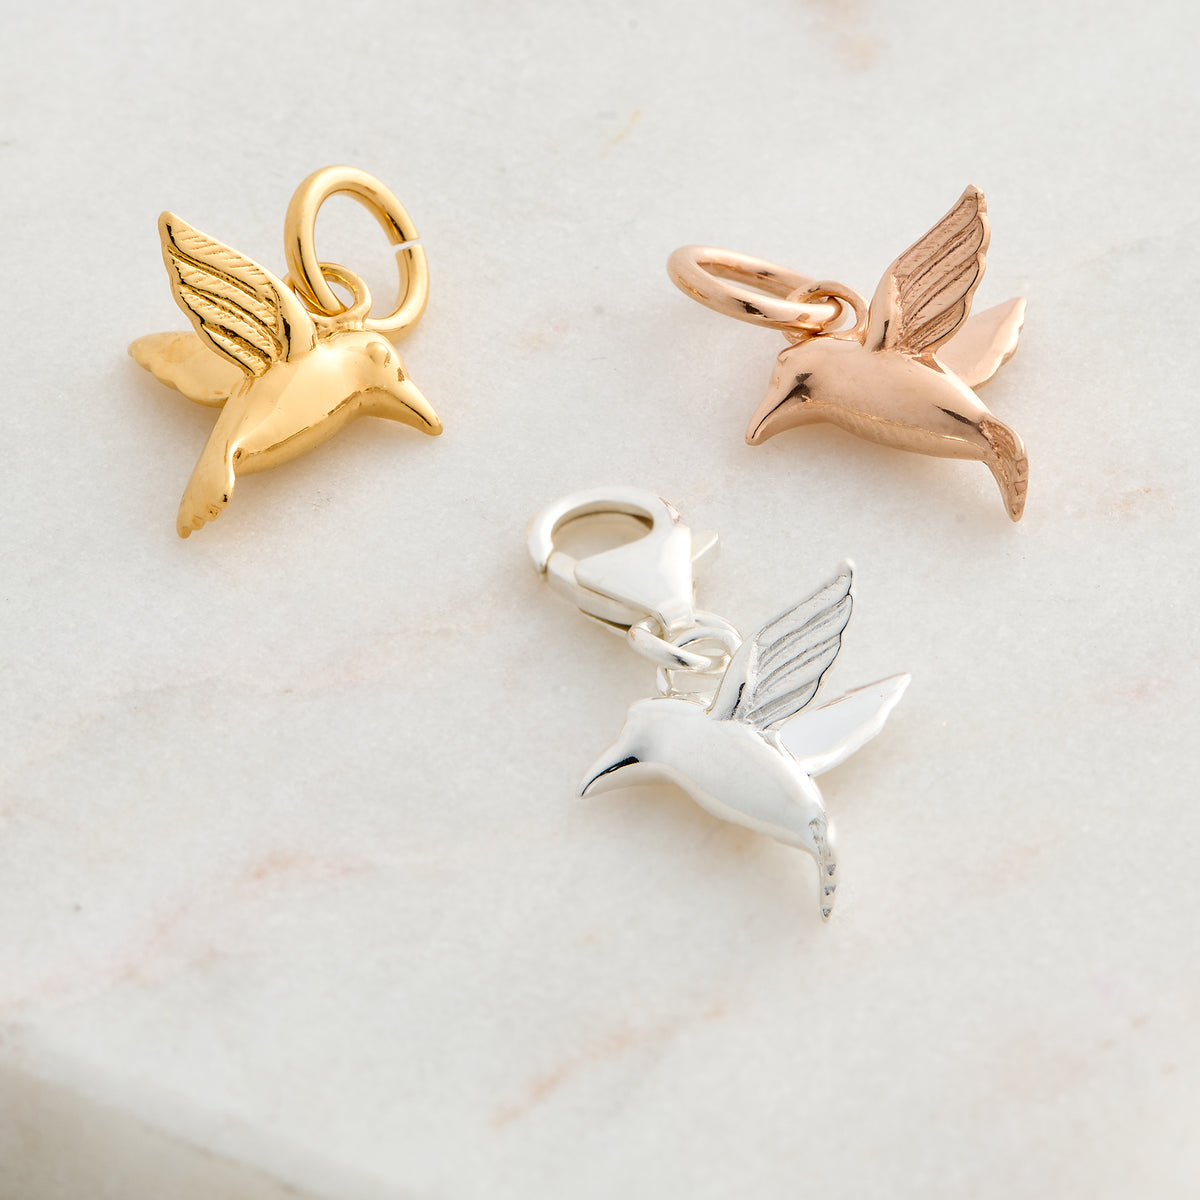 silver gold rose hummingbird charm for bracelet necklace pendant fits pandora bird charms